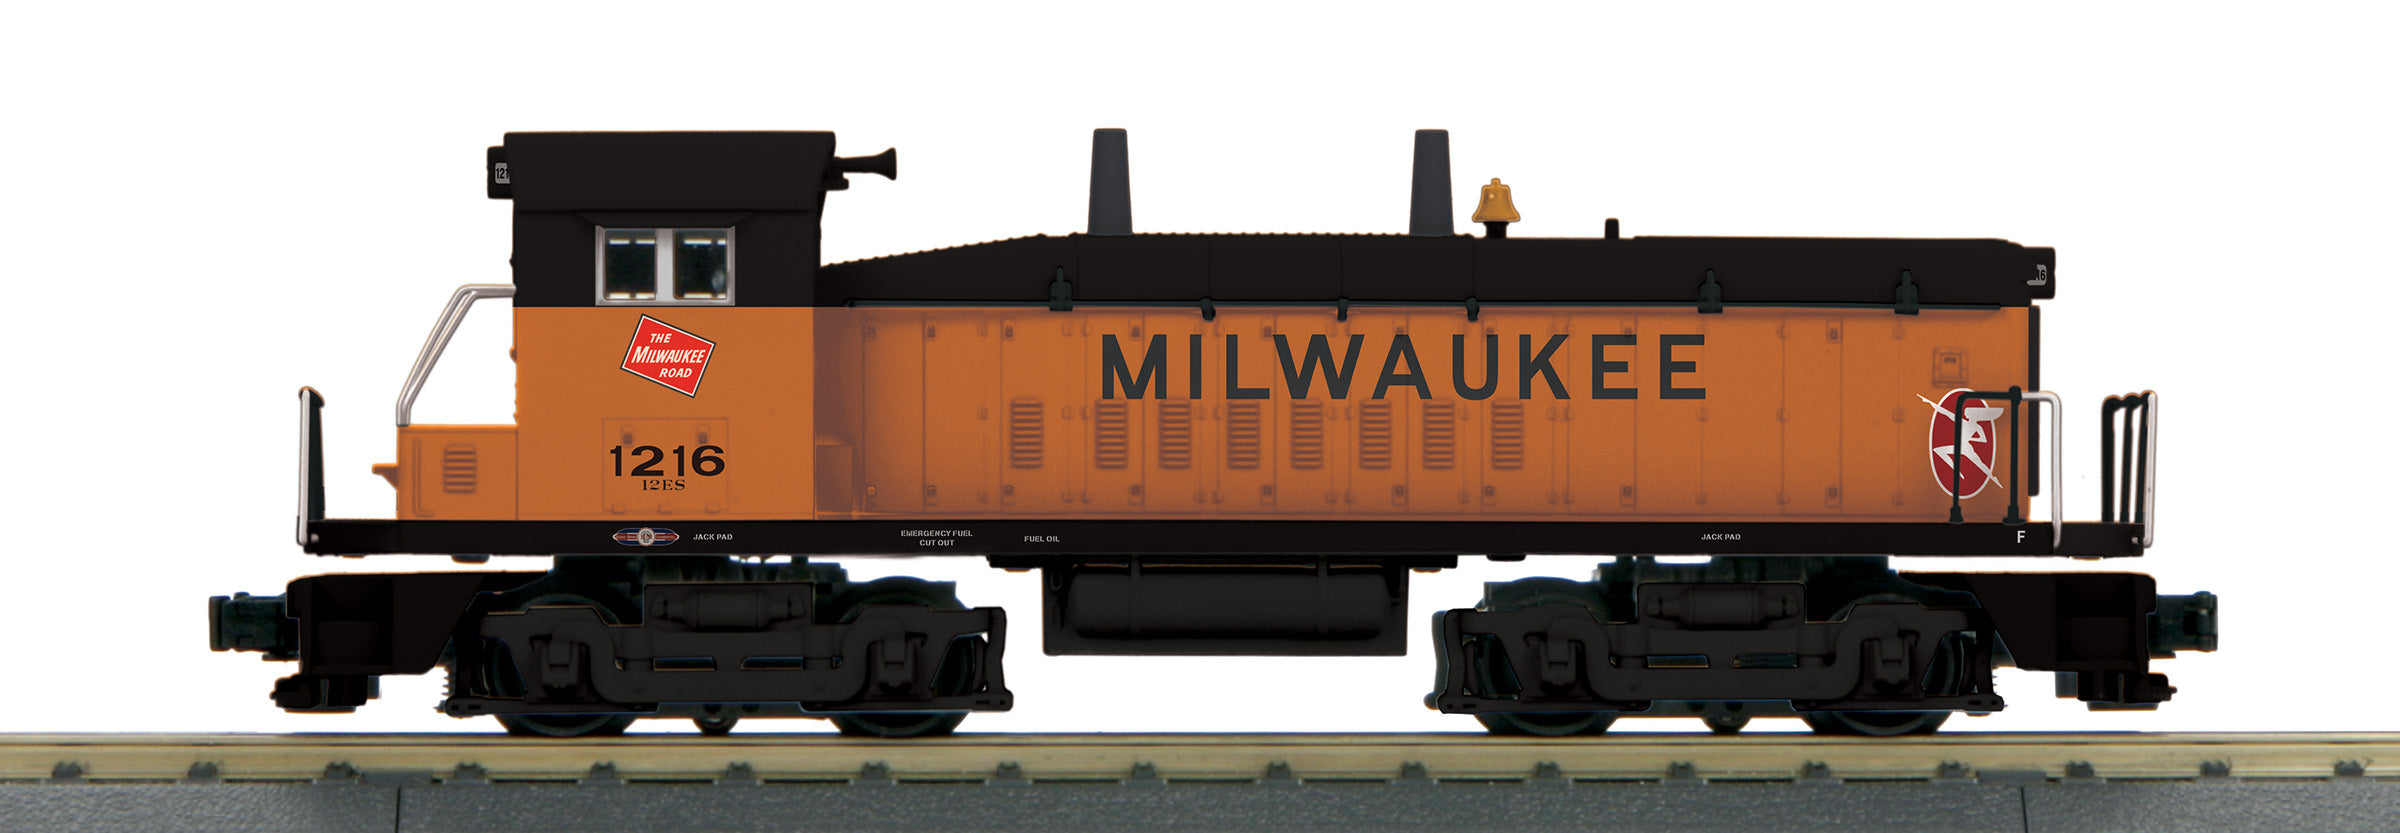 MTH 30-21065-1 - SW1200 Switcher Diesel Engine "Milwaukee Road" #1216 w/ PS3 - Custom Run for MrMuffin'sTrains